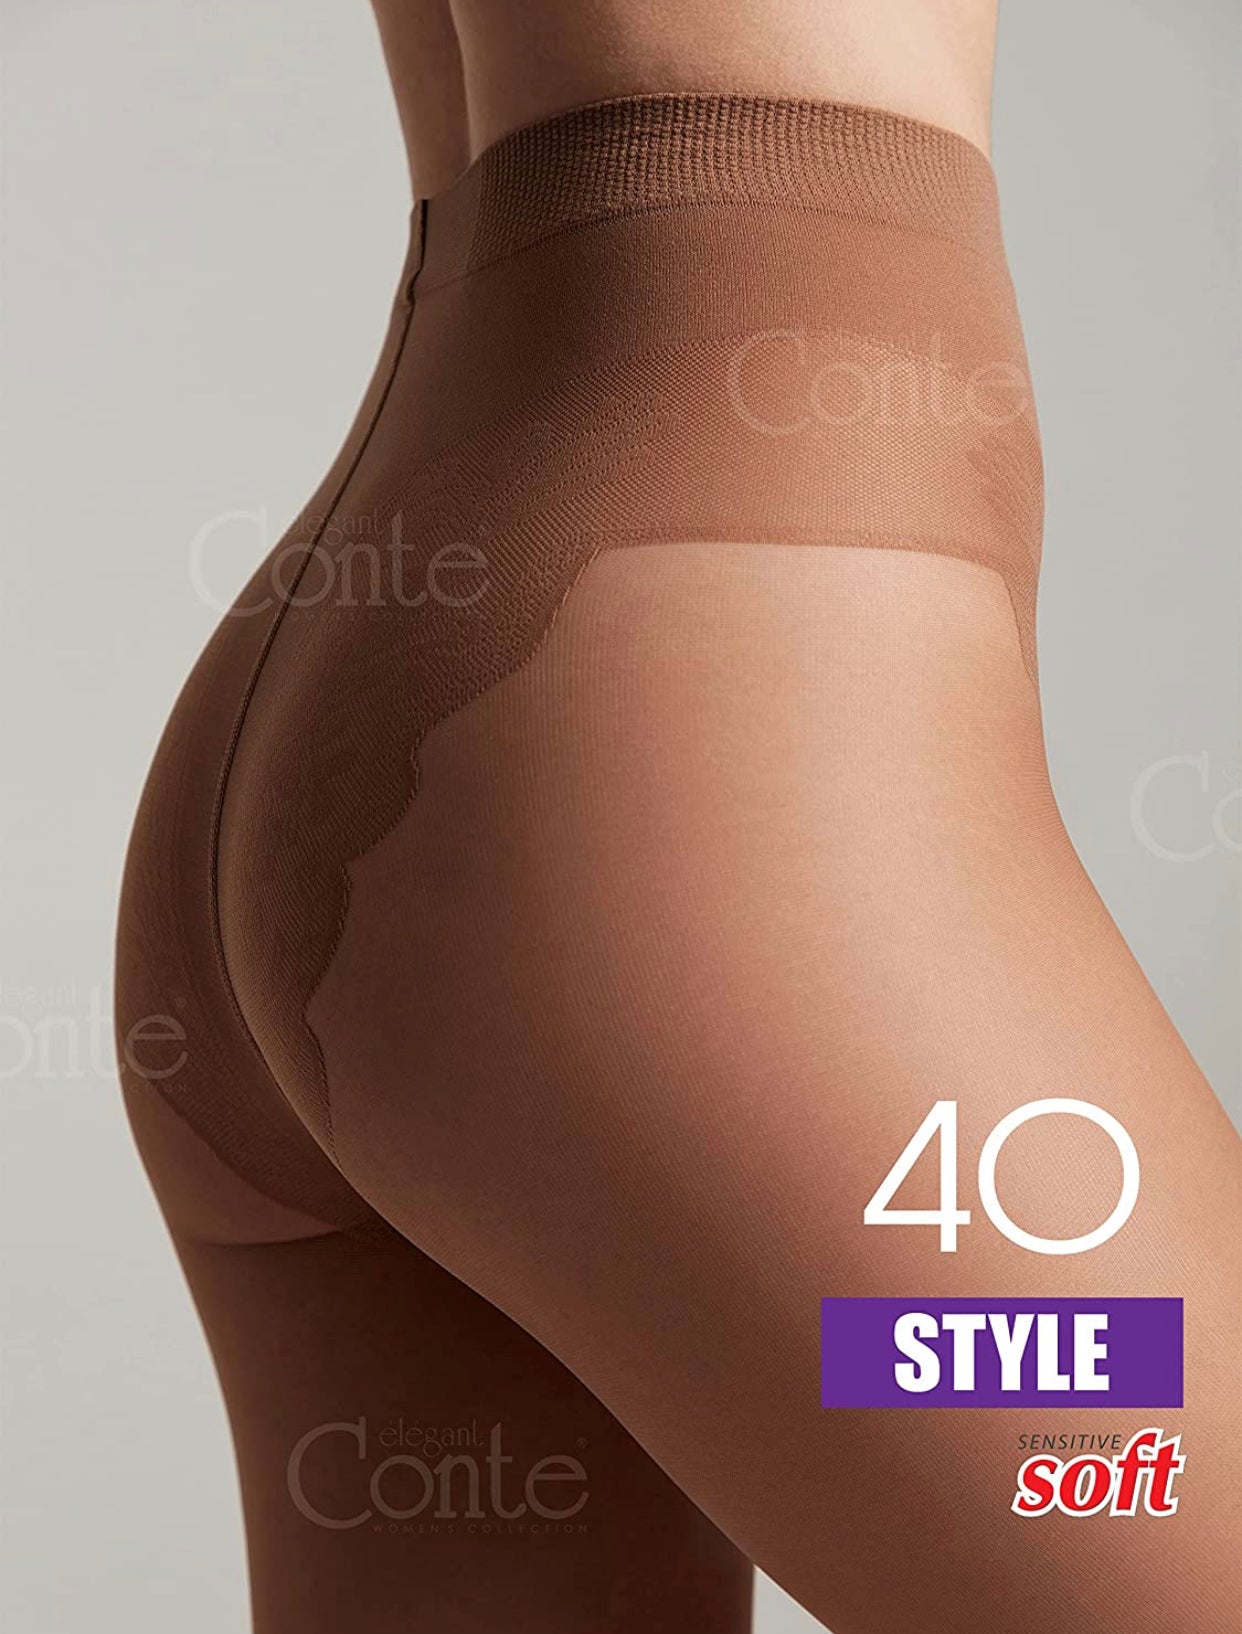 Conte elegant Control Women's 40 Denier Shaping Pantyhose